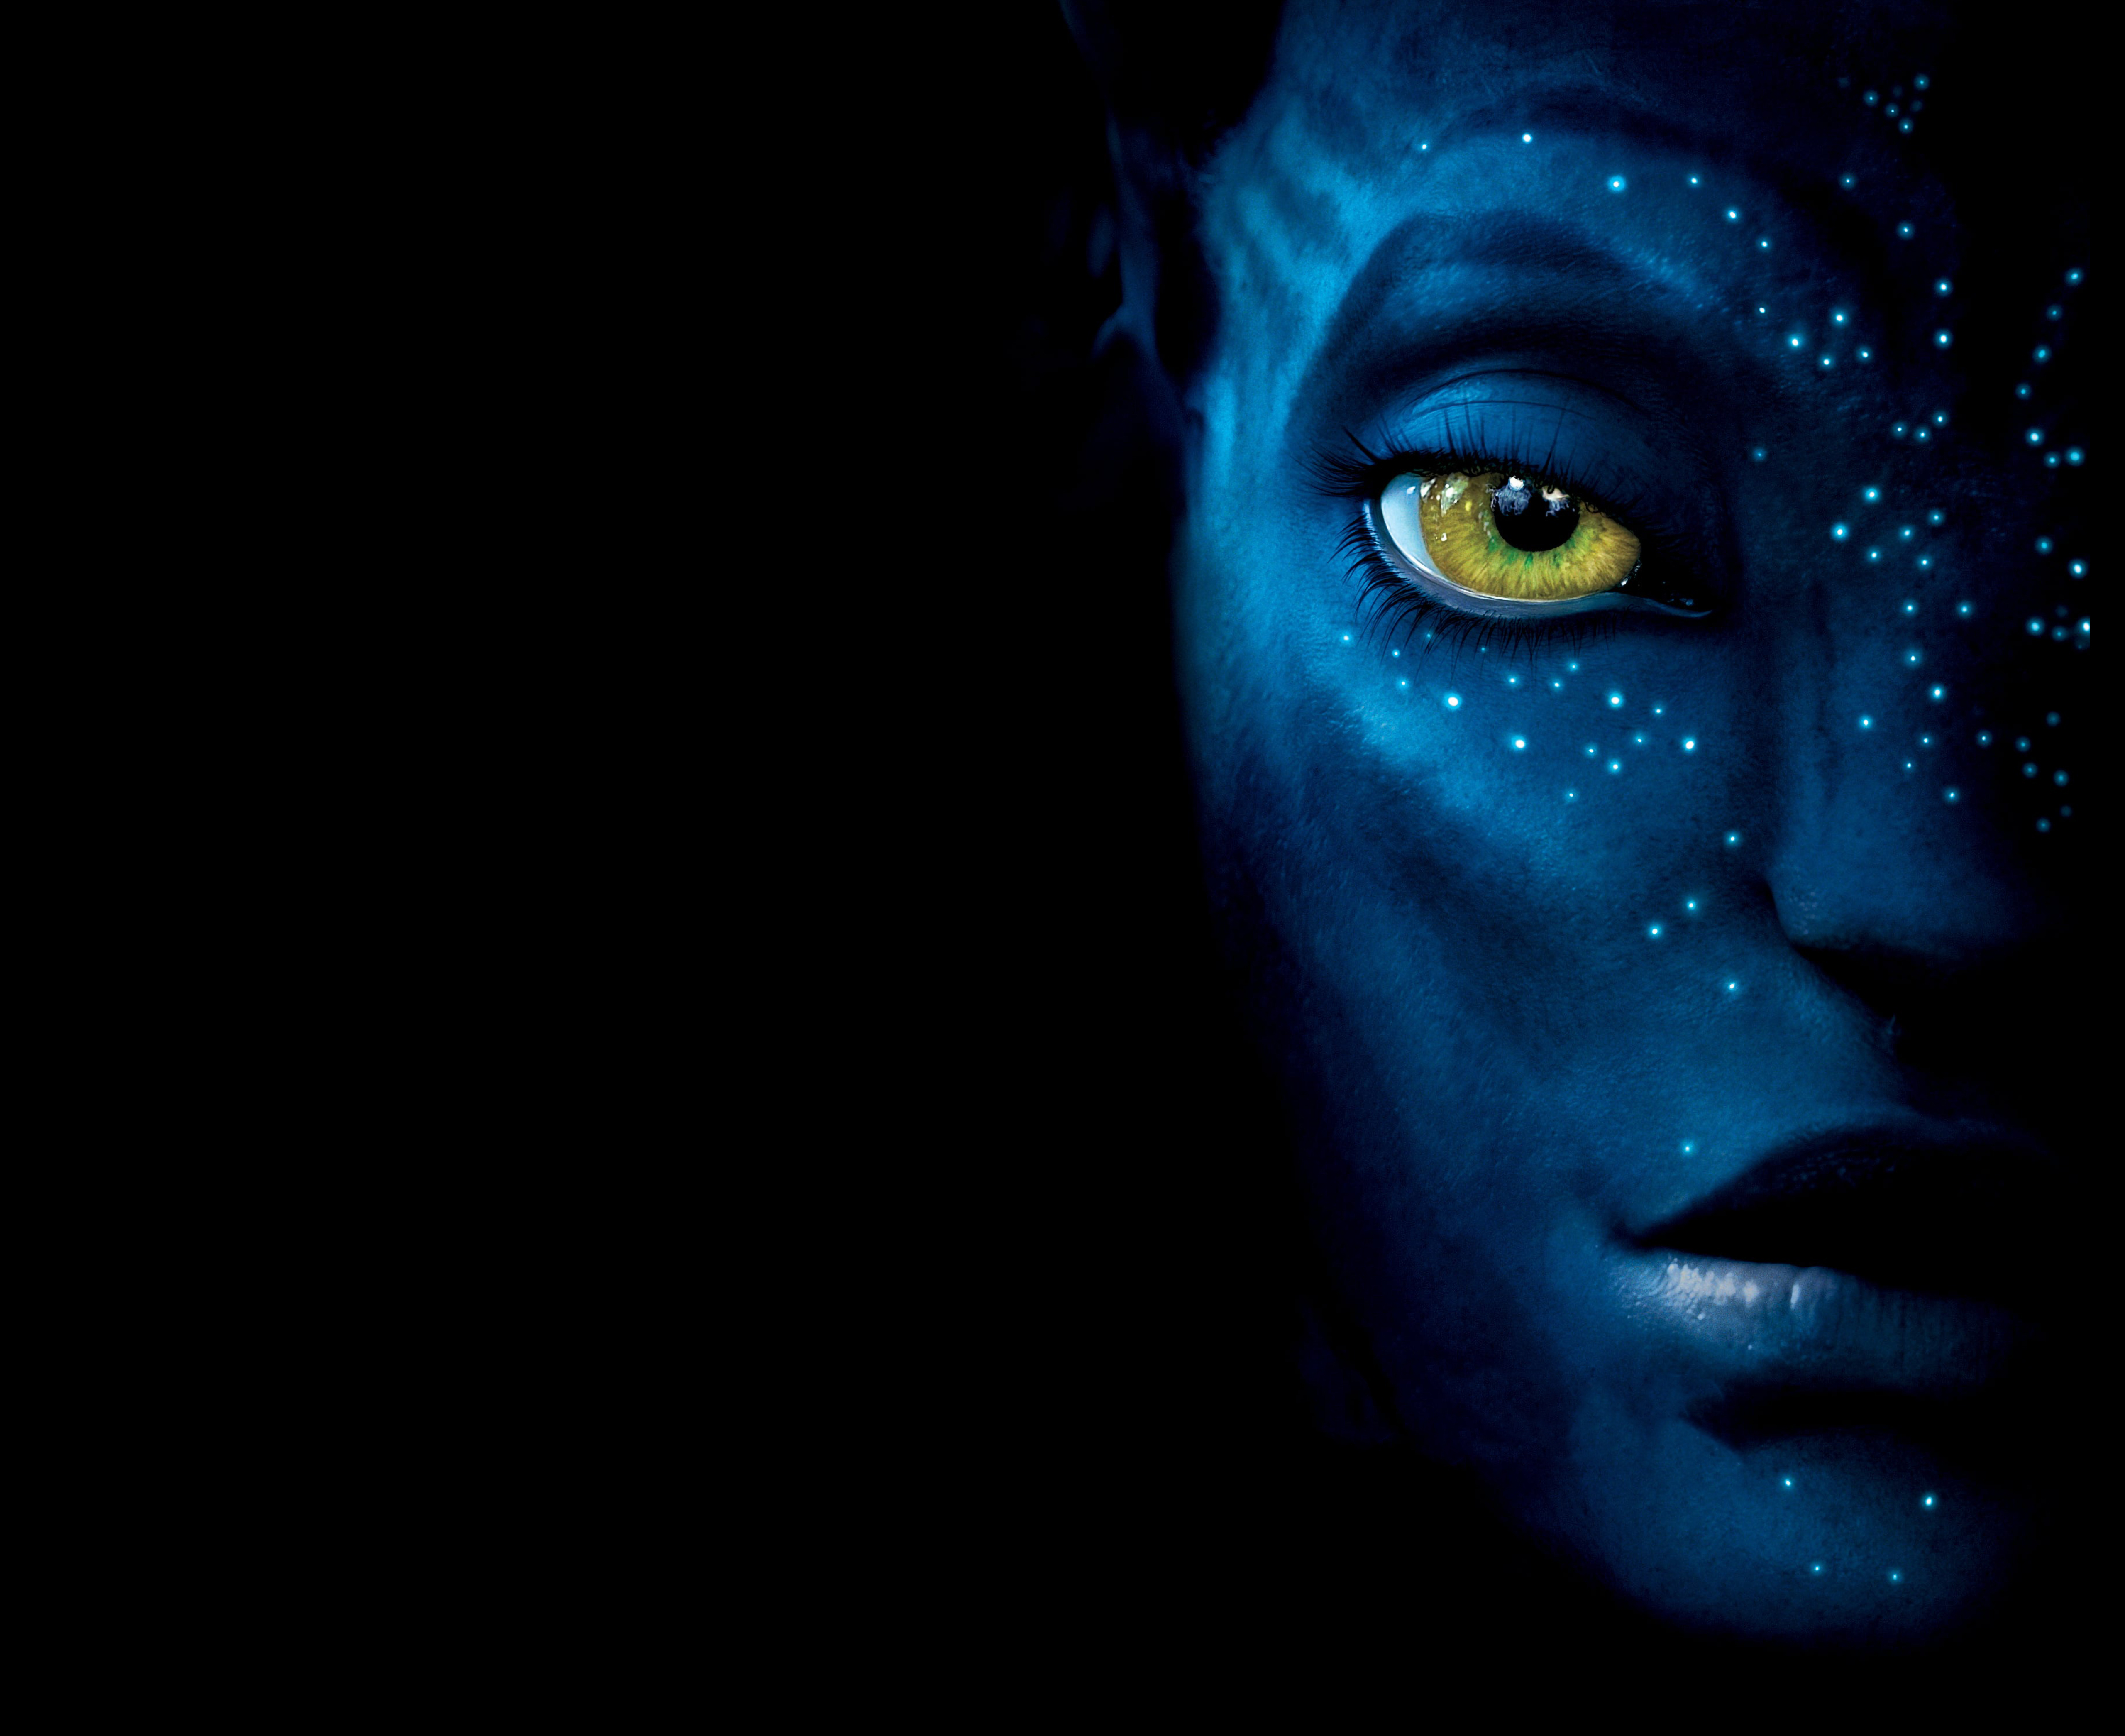 Download123𝘮ovies Avatar 2 The Way of Water 2022 FullMovie Free  MP4720p 1080p HD 4K EnglishSub  Monhorloger